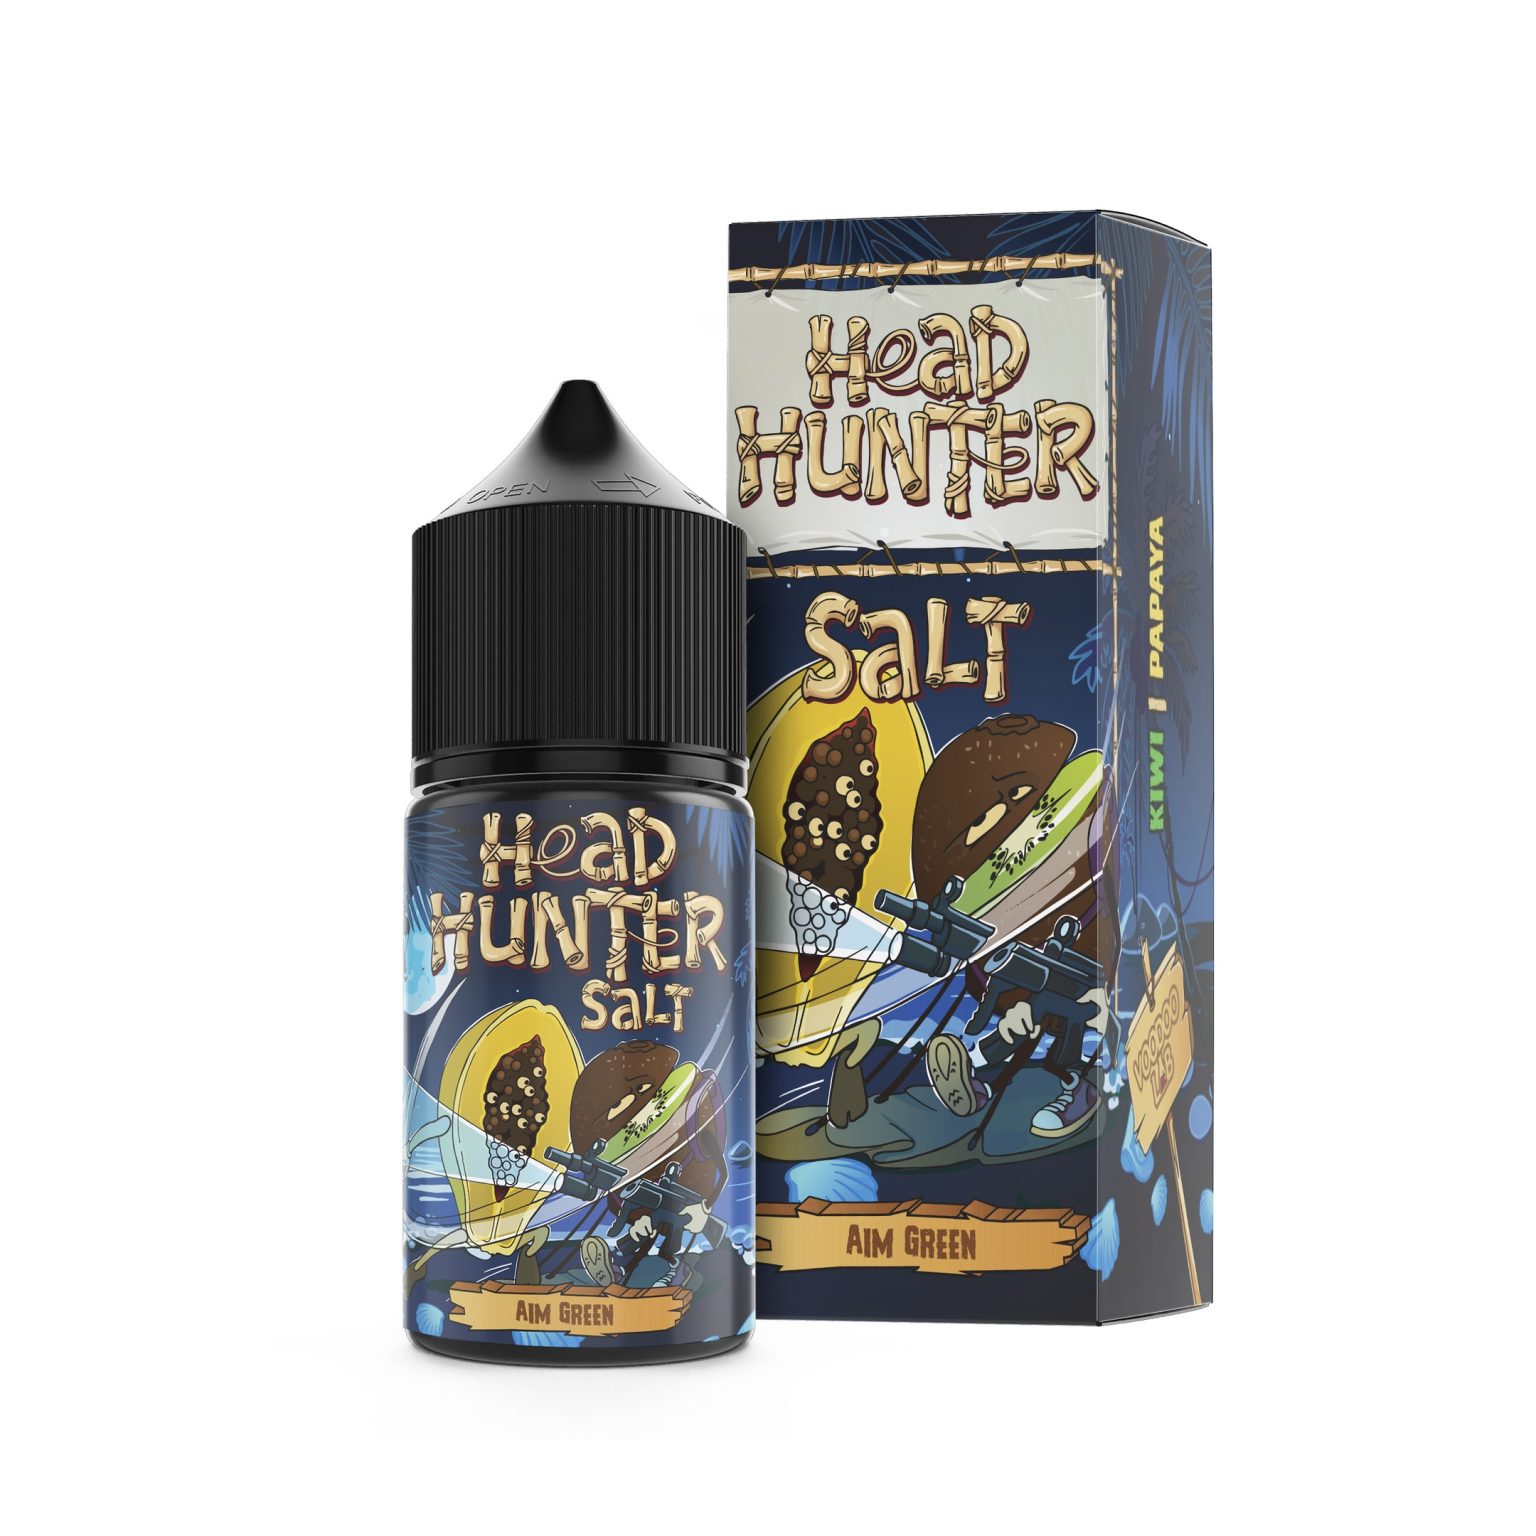 360.00. Head Hunter Salt - Aim Green 25аМаГ. тН. HEAD HUNTER SALT. 